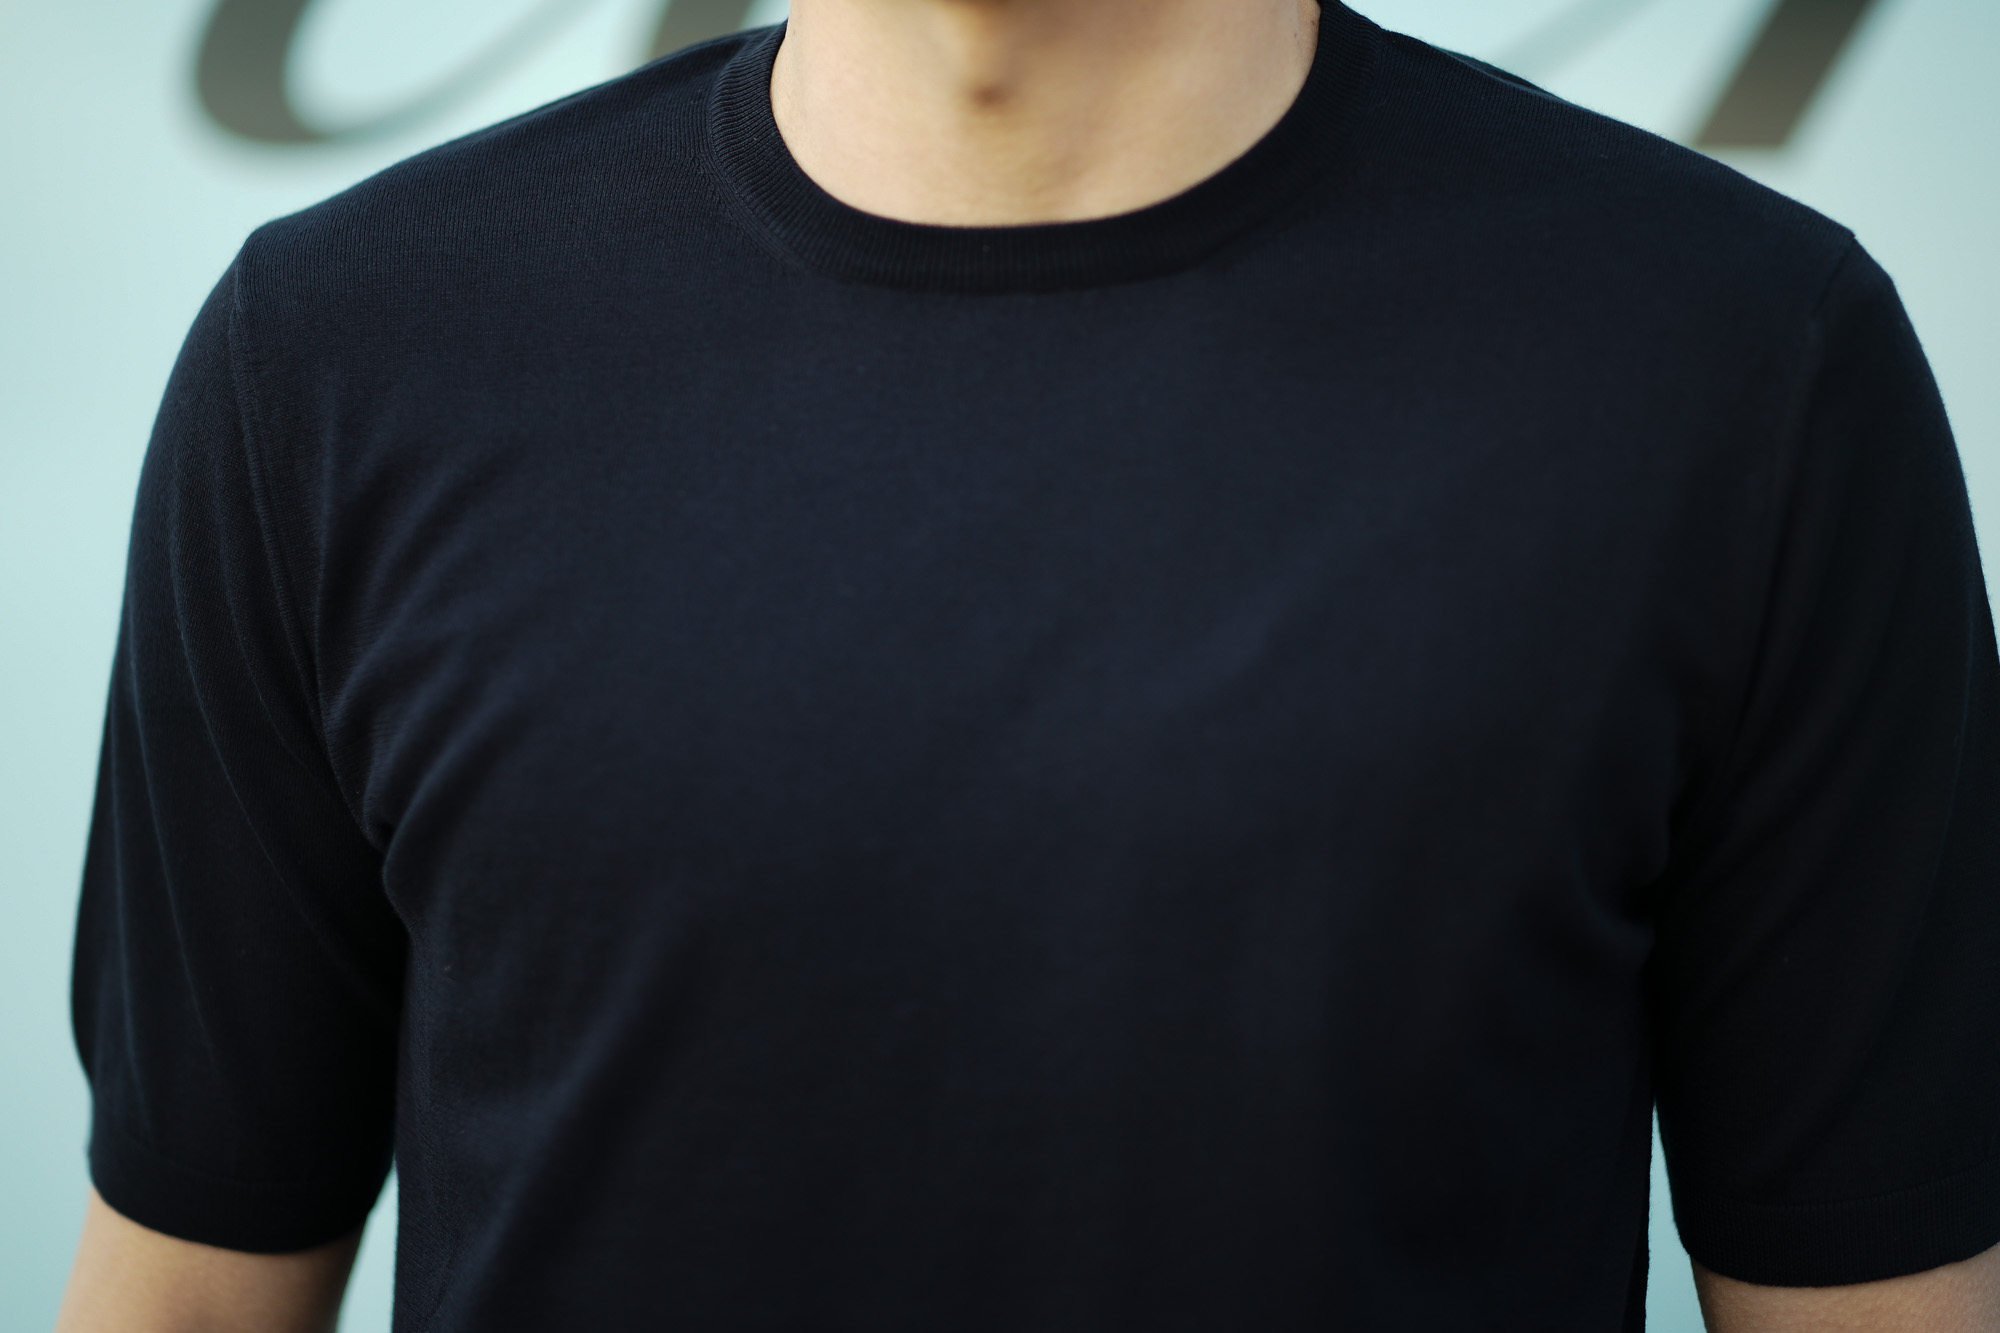  Cruciani(クルチアーニ) 33G Knit T-shirt 33ゲージ コットン ニット Tシャツ NAVY (ネイビー・Z0064)  made in italy (イタリア製) 2020 春夏新作 愛知 名古屋 altoediritto アルトエデリット ニットTEE